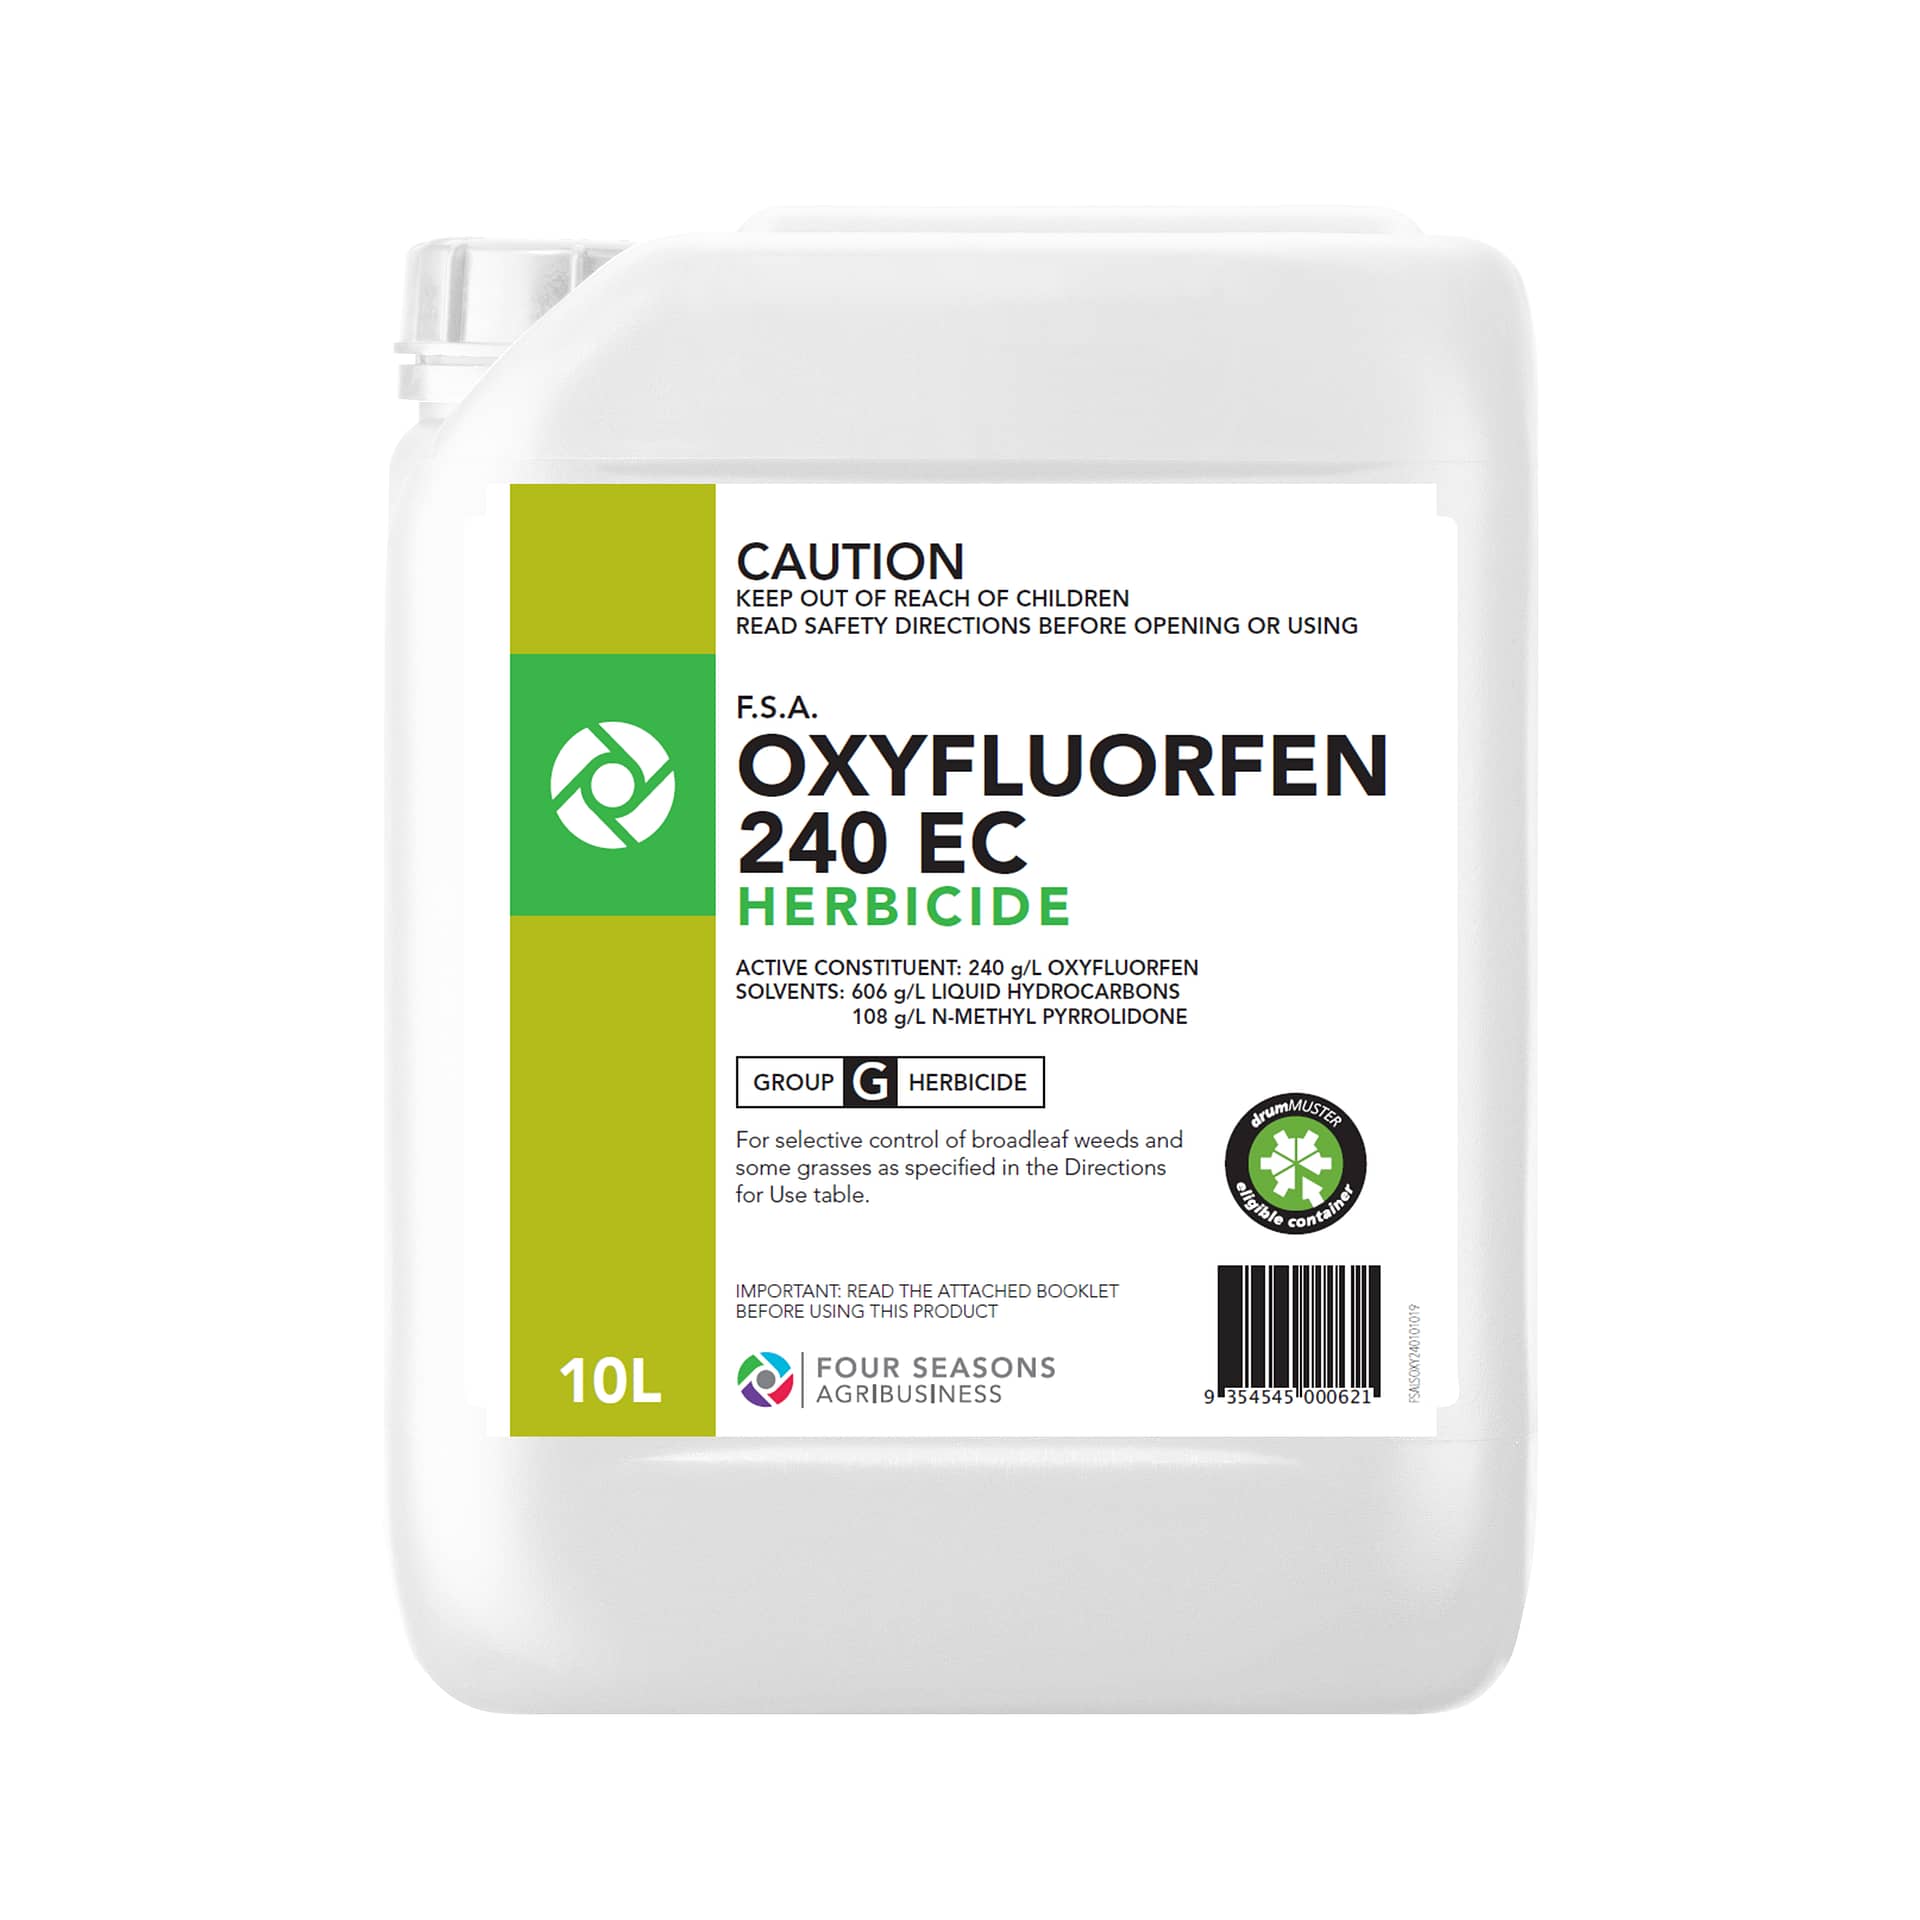 Commander Fluorescéine Oxybuprocaïne SDU Faure 0.4 % 20 x 0.4 ml